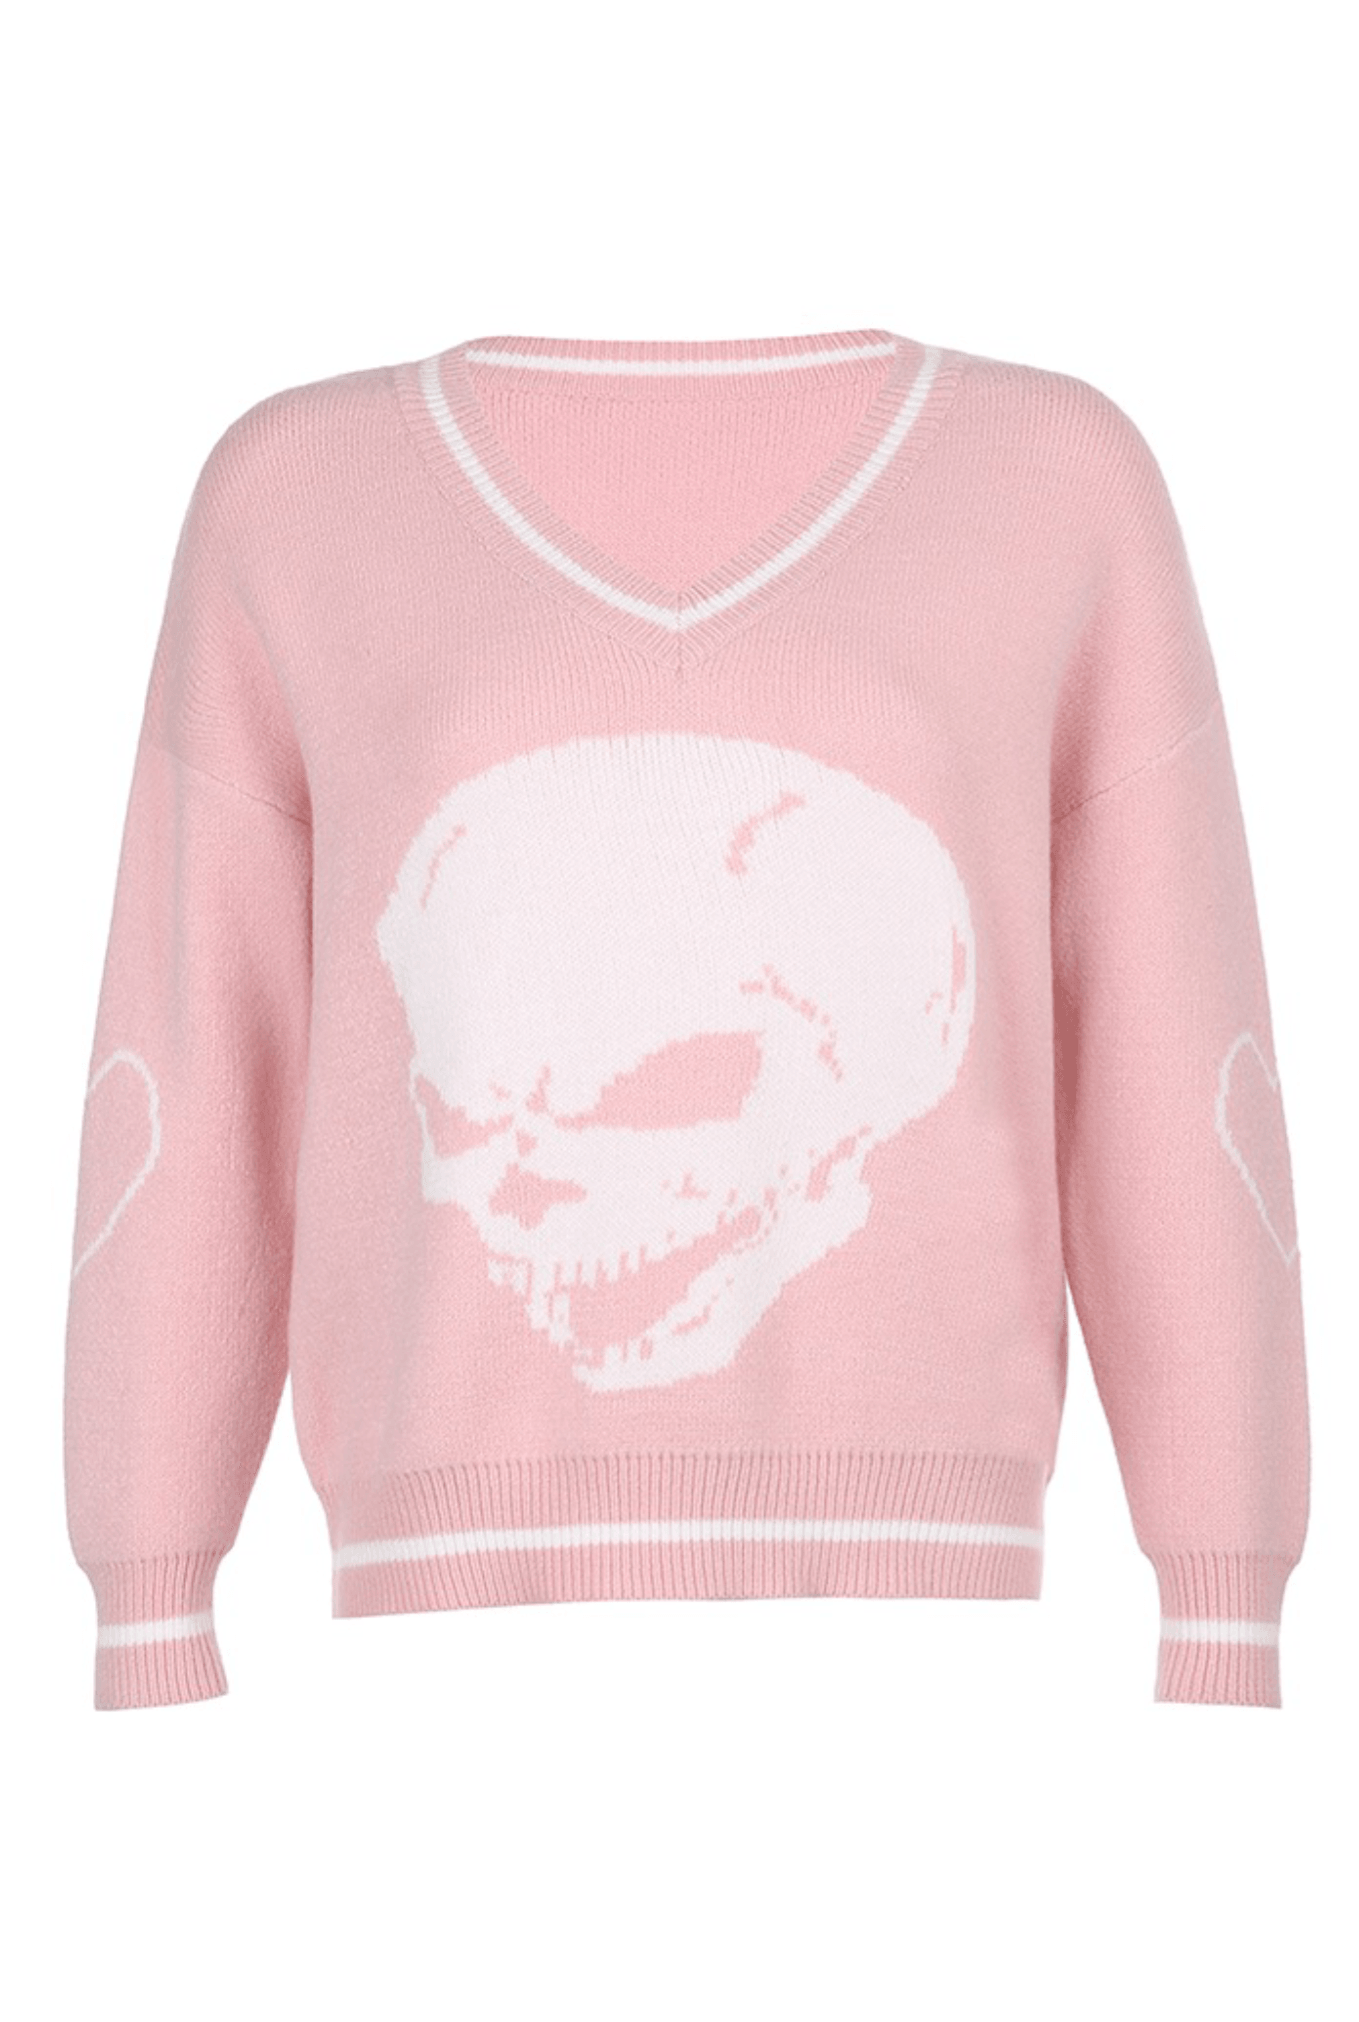 Skeleton Knitted Sweater - shopuntitled.co